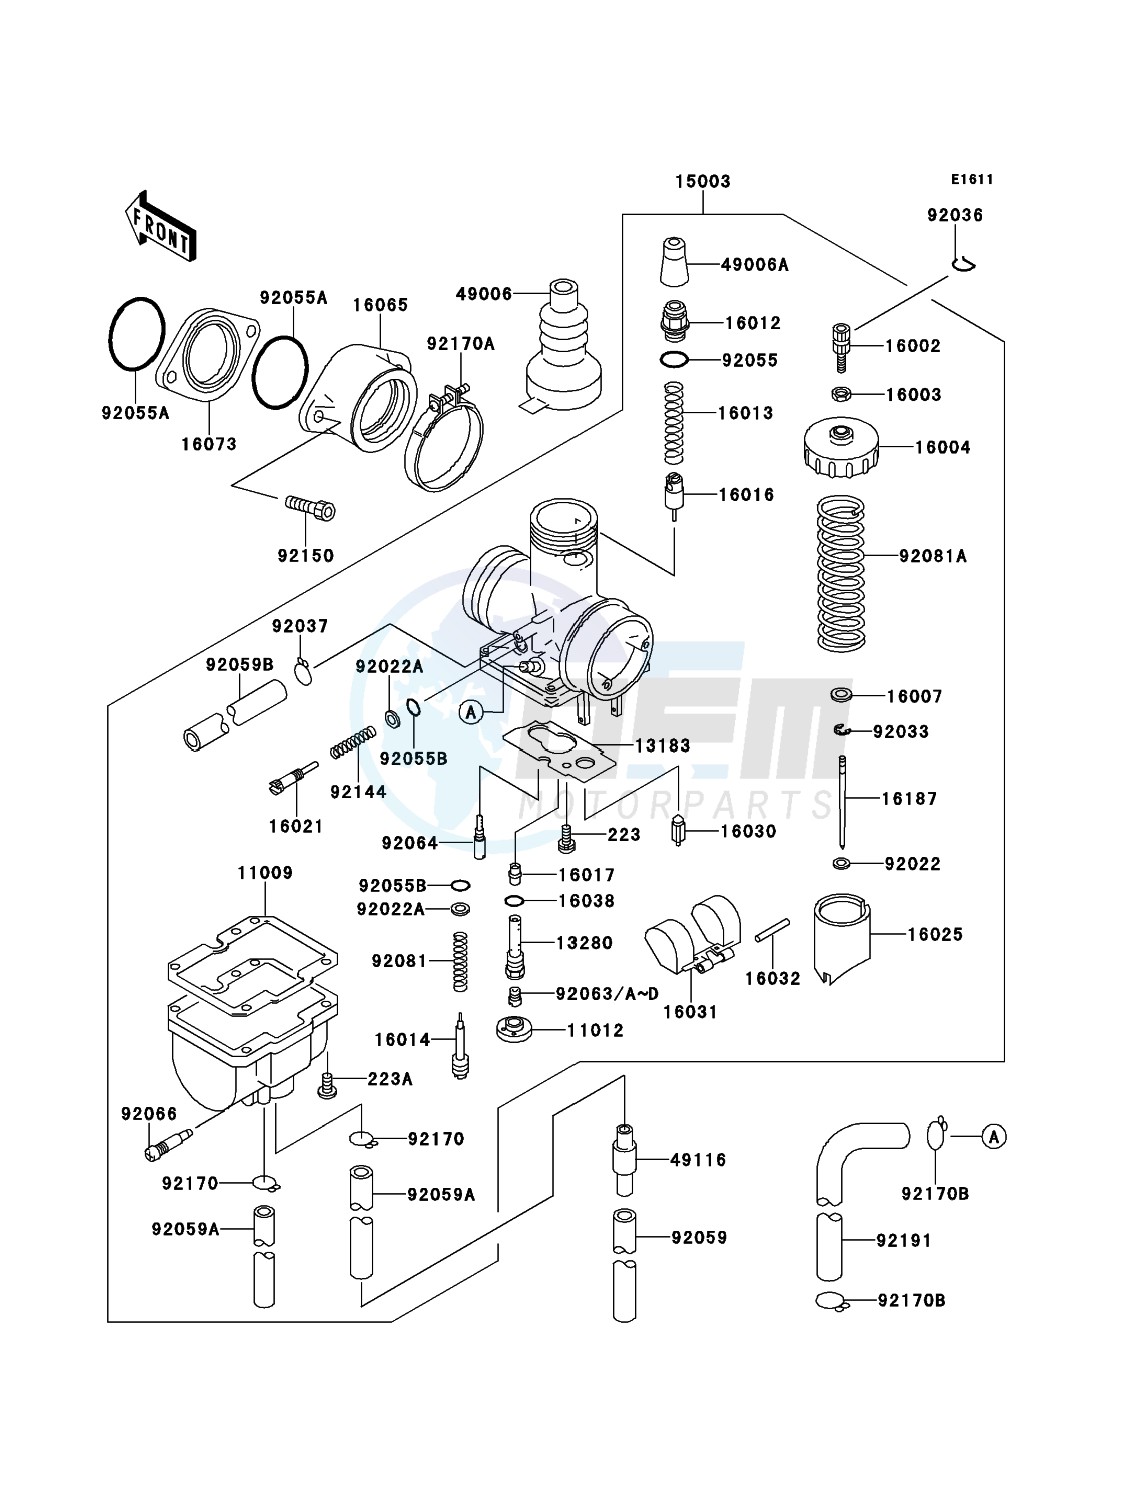 Carburetor blueprint